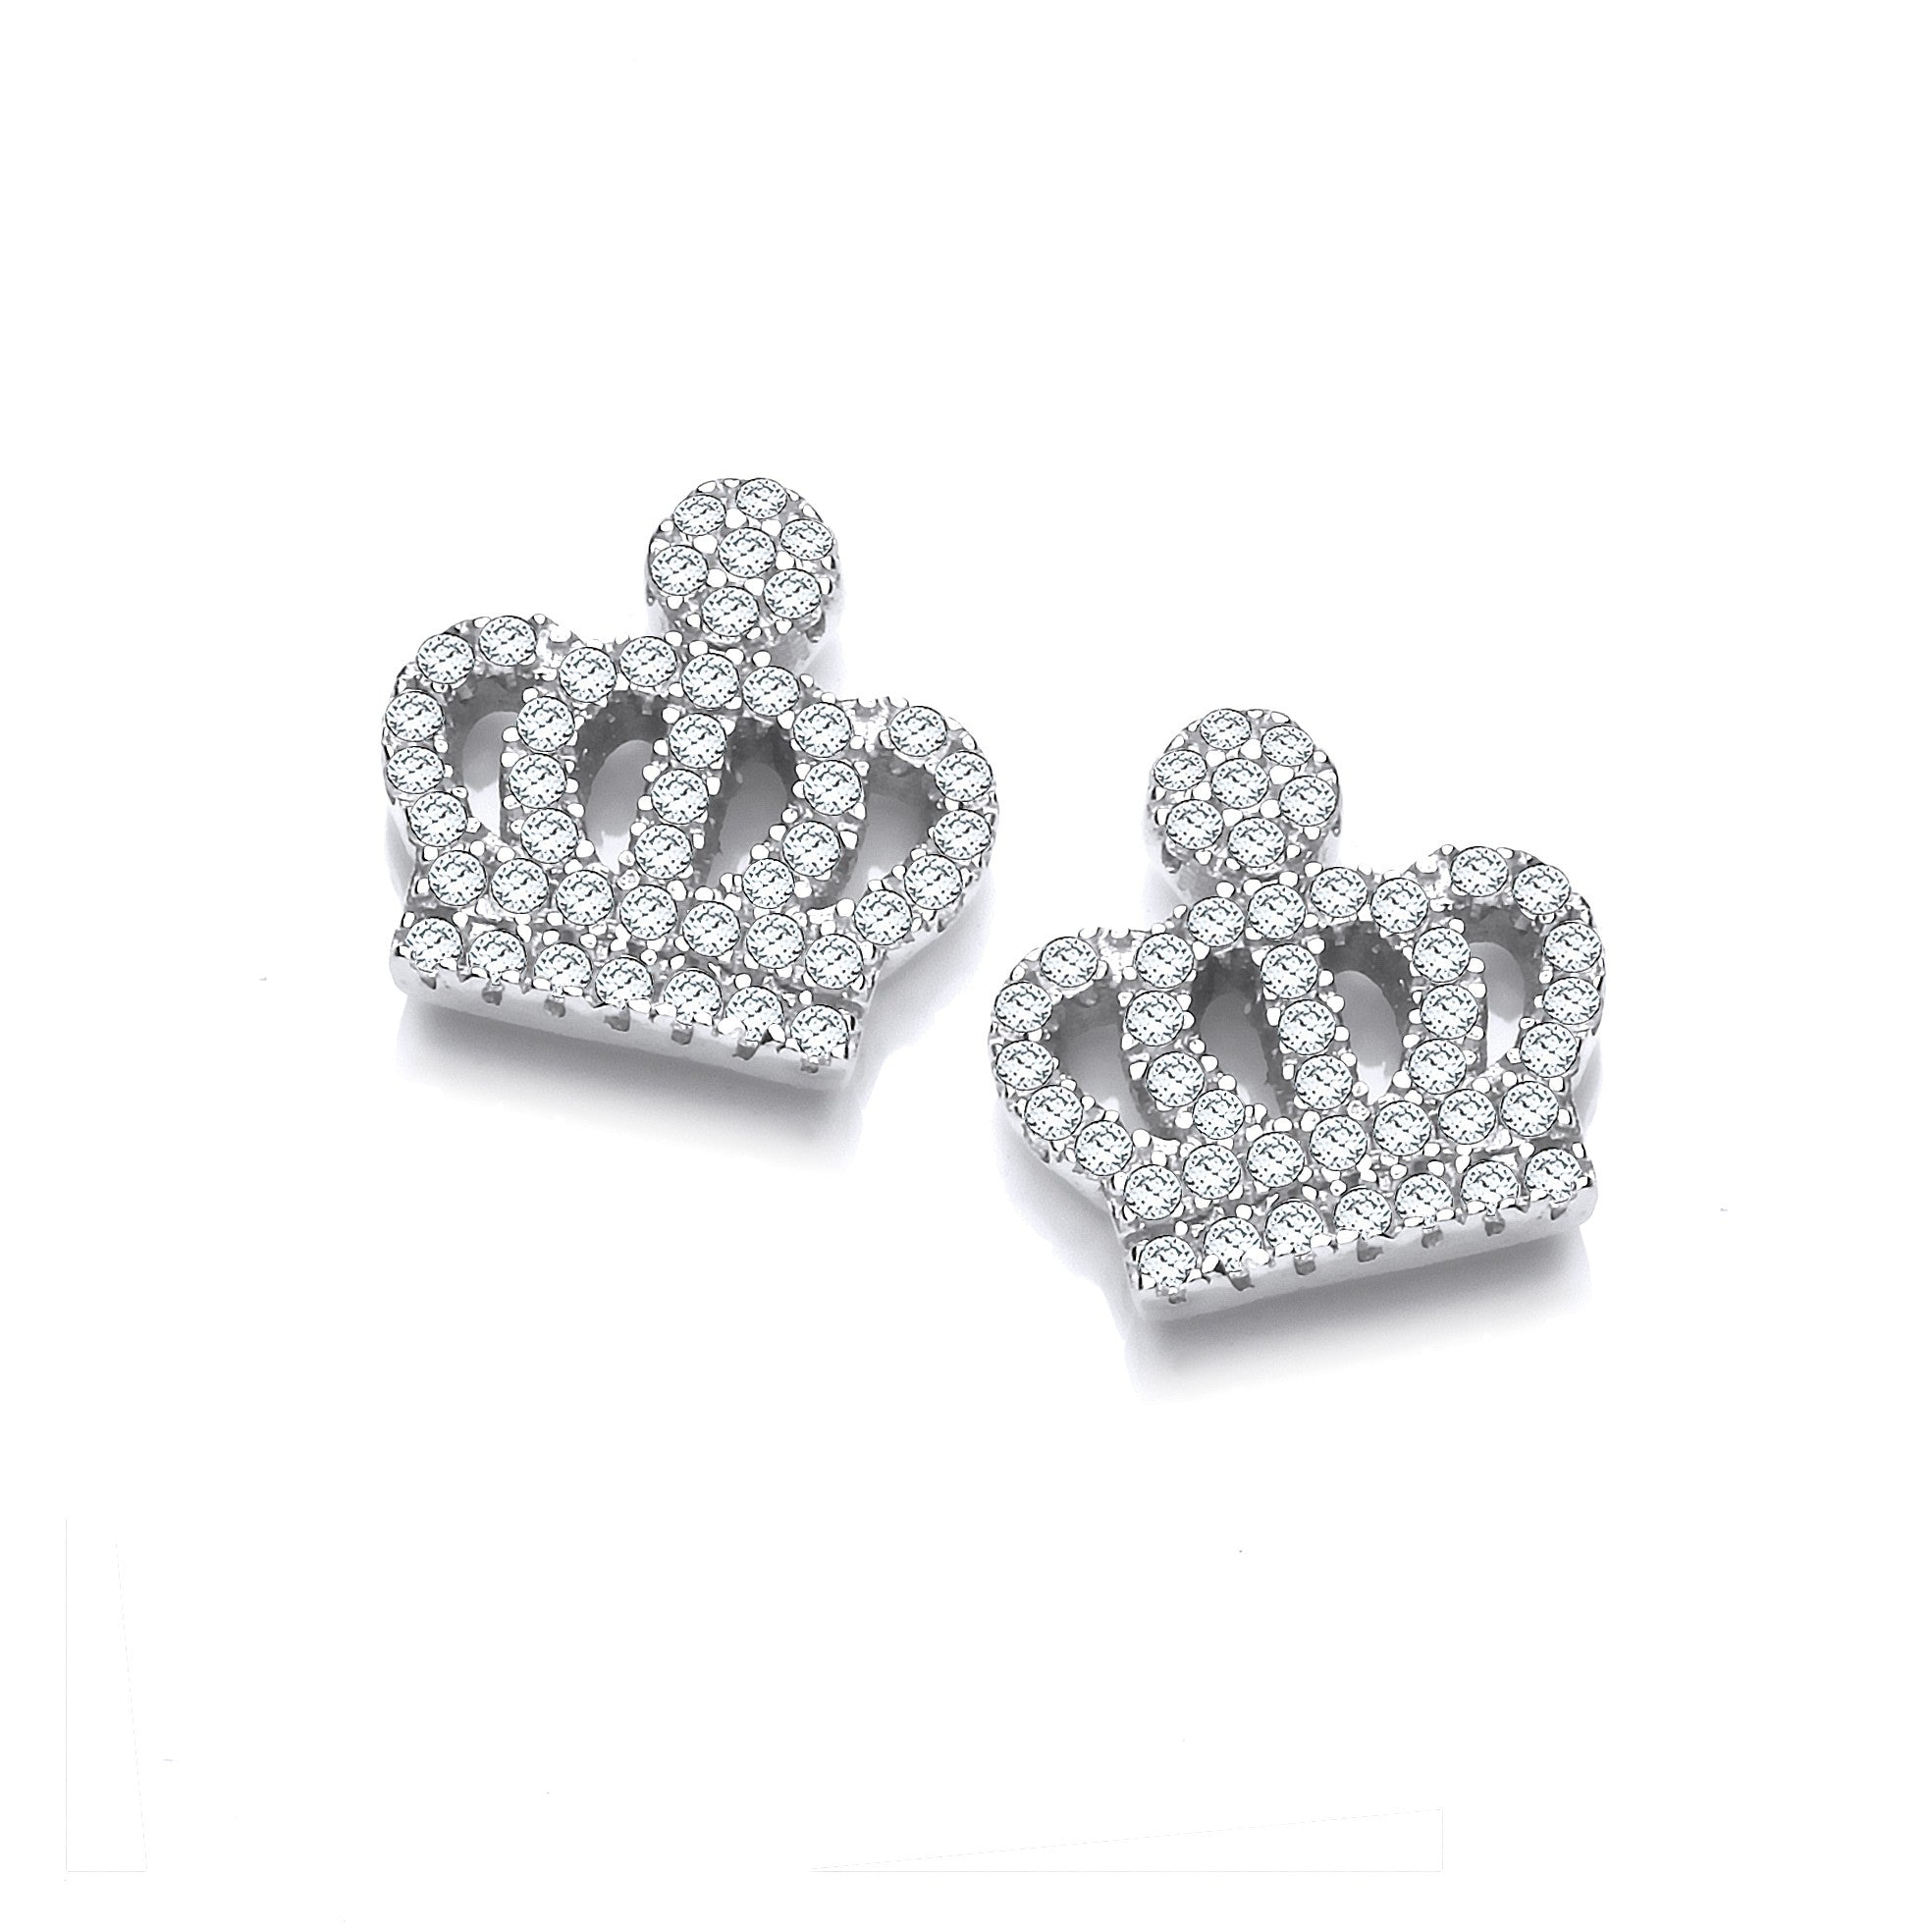 Micro Pave Cz Crown Stud Silver Earrings